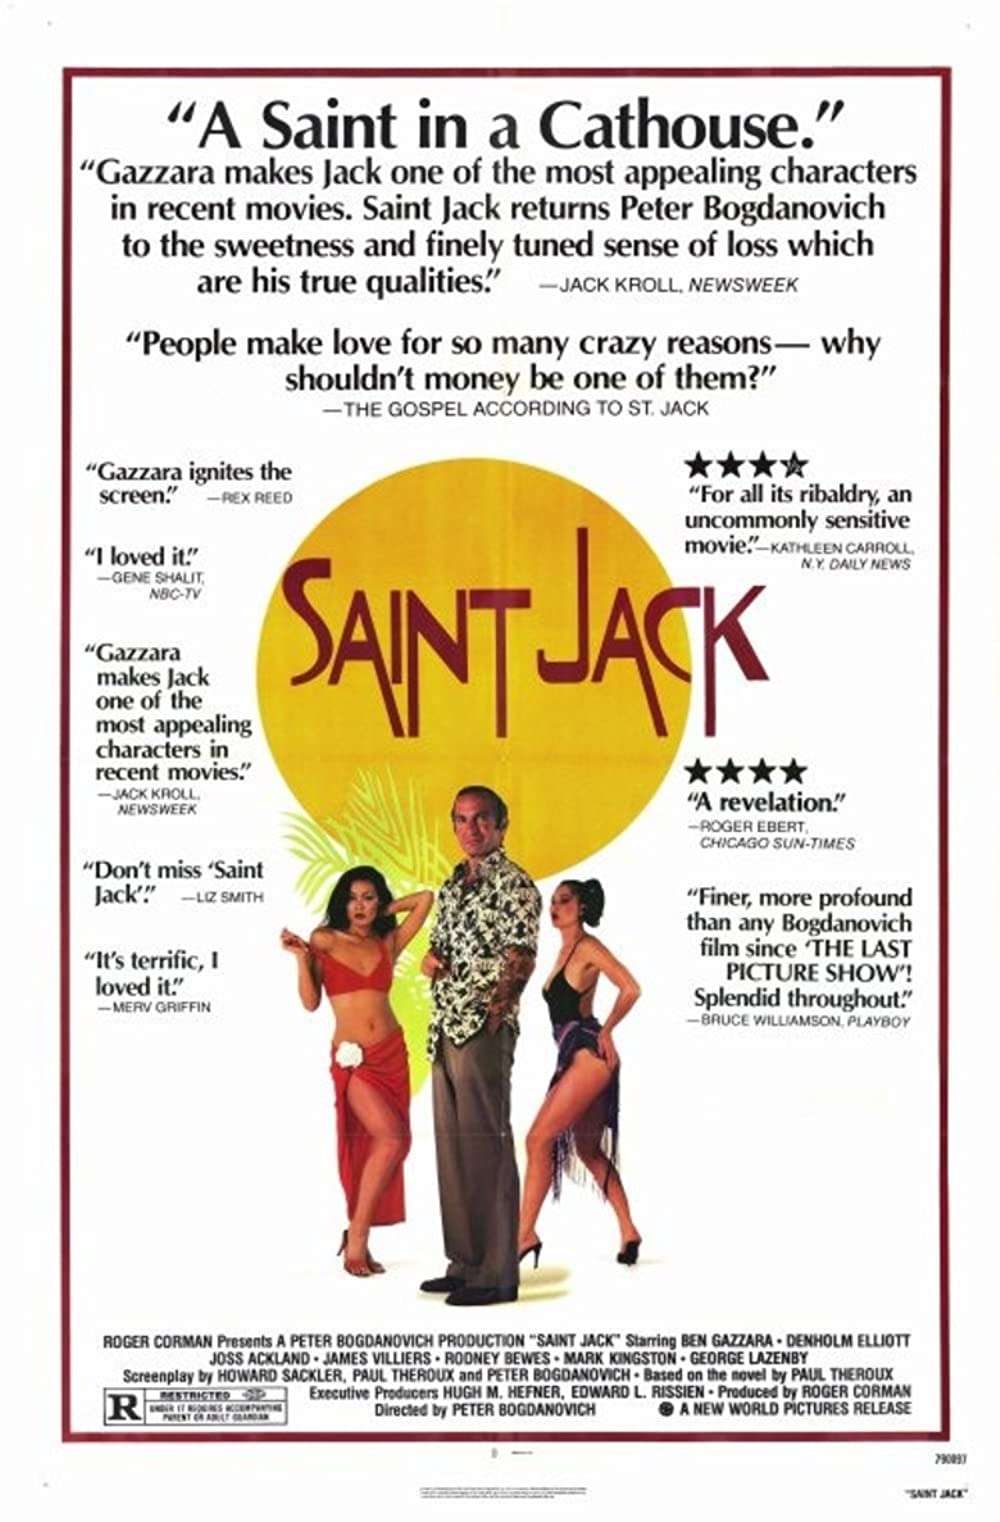 Filmbeschreibung zu Saint Jack